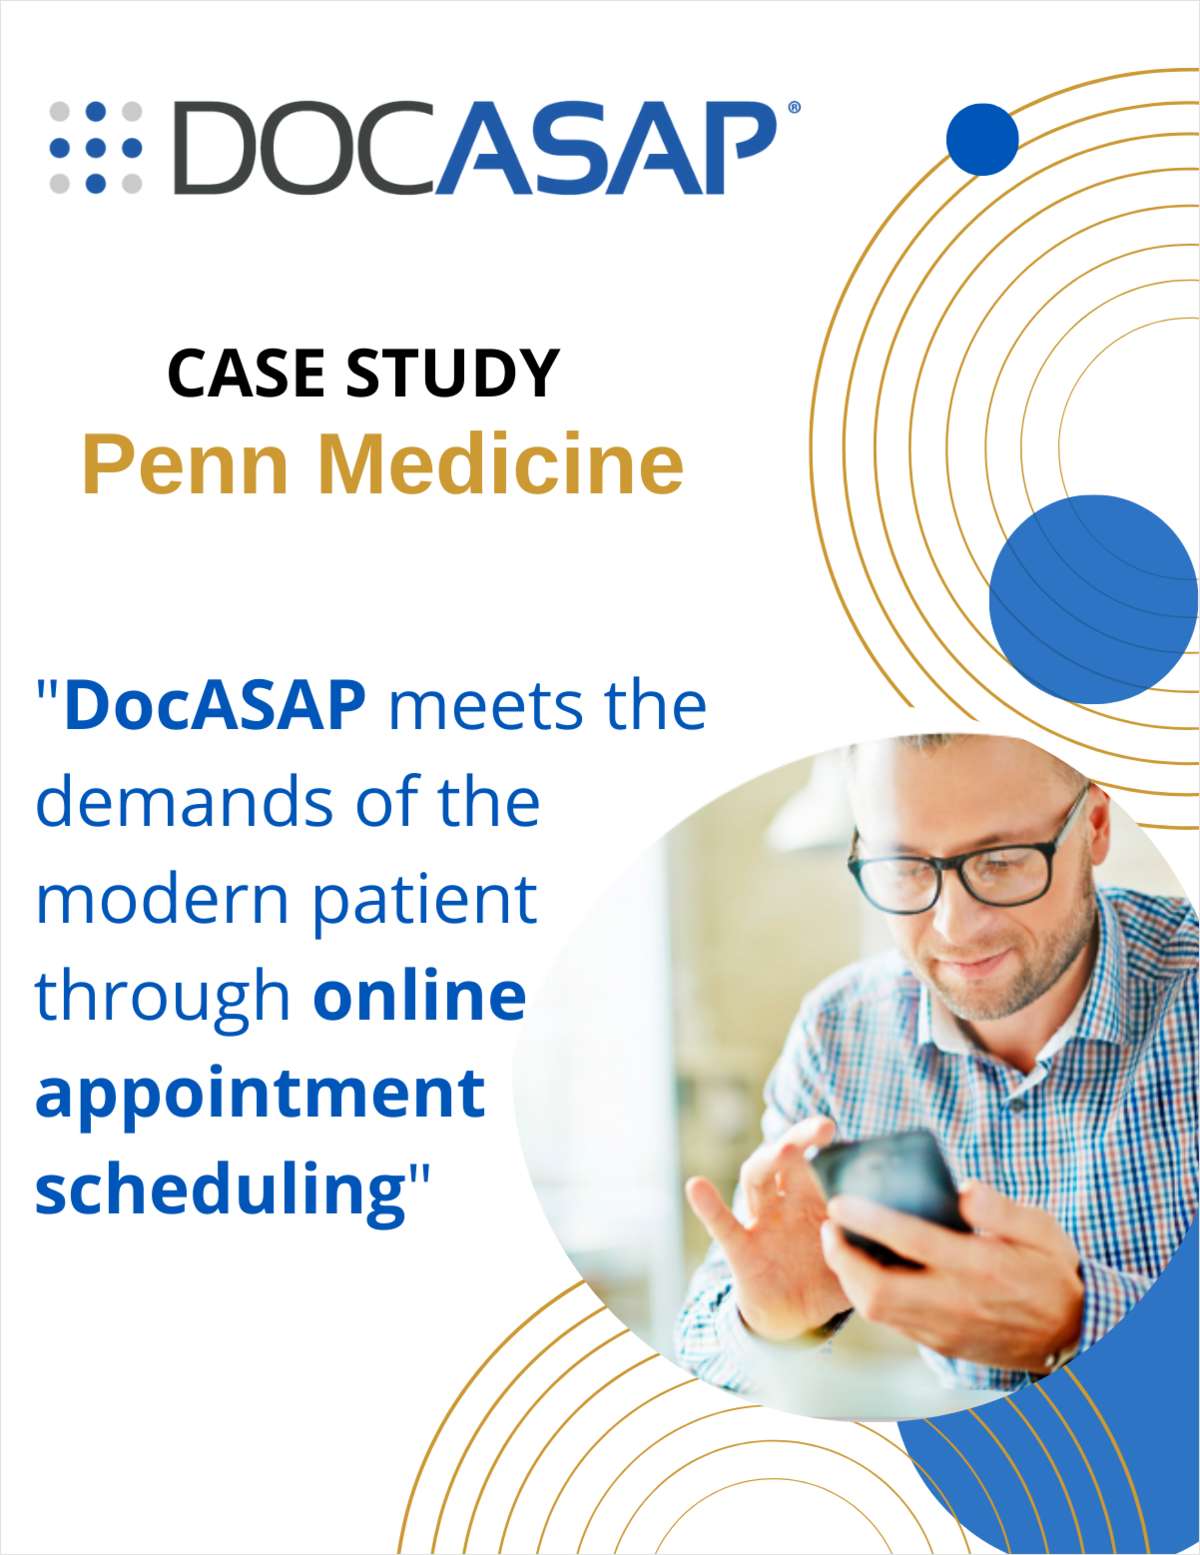 DocASAP meets demands of the modern patient through online appointment scheduling